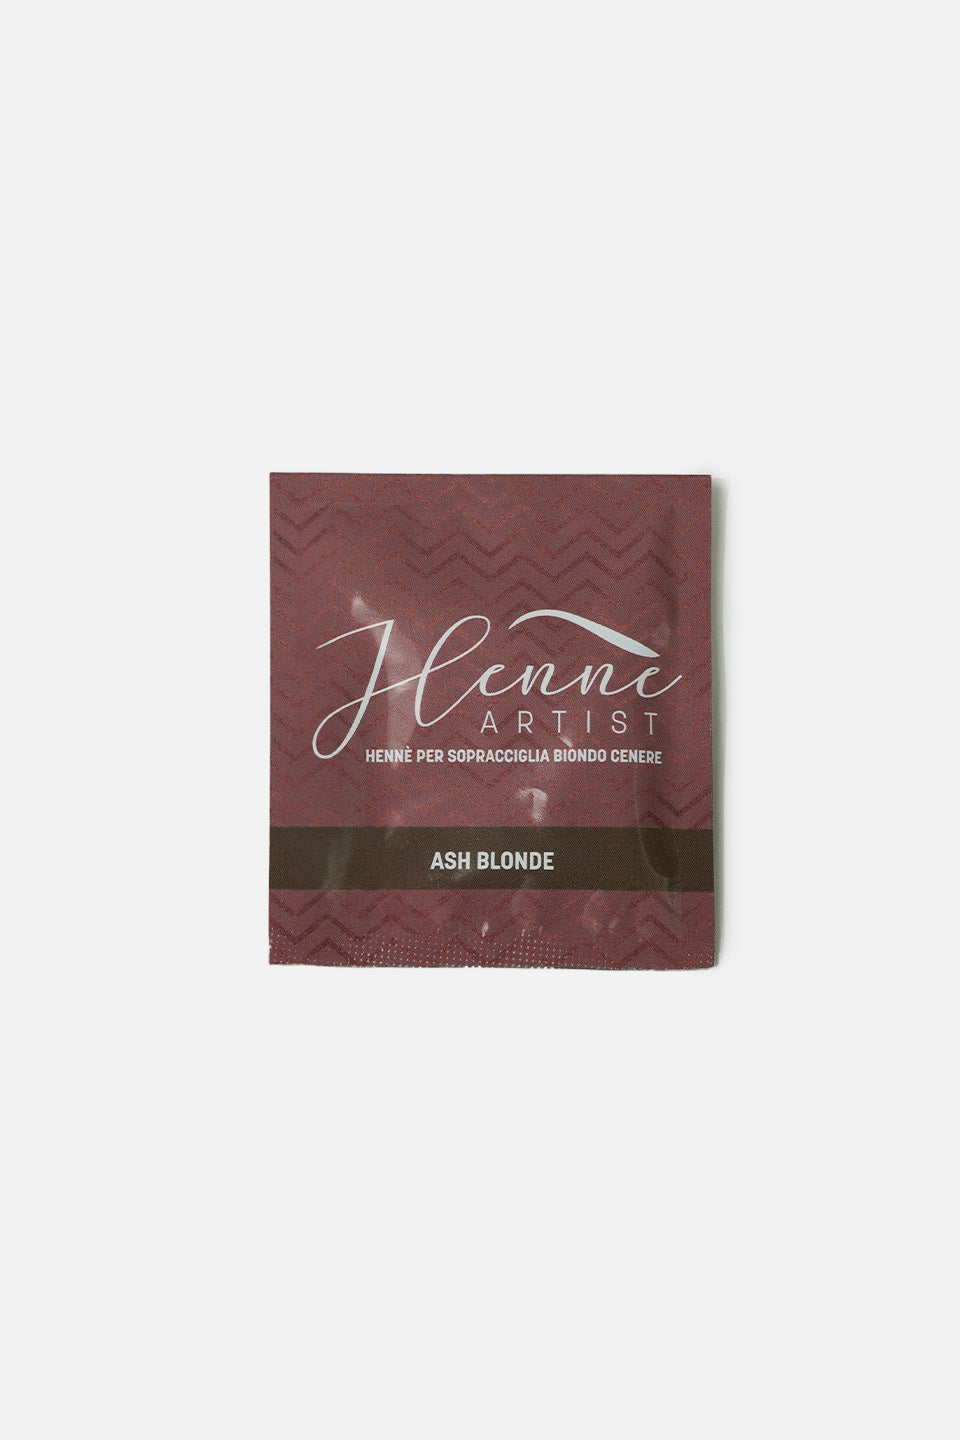 Kit completo de henna para cejas - HENNÈ ARTIST